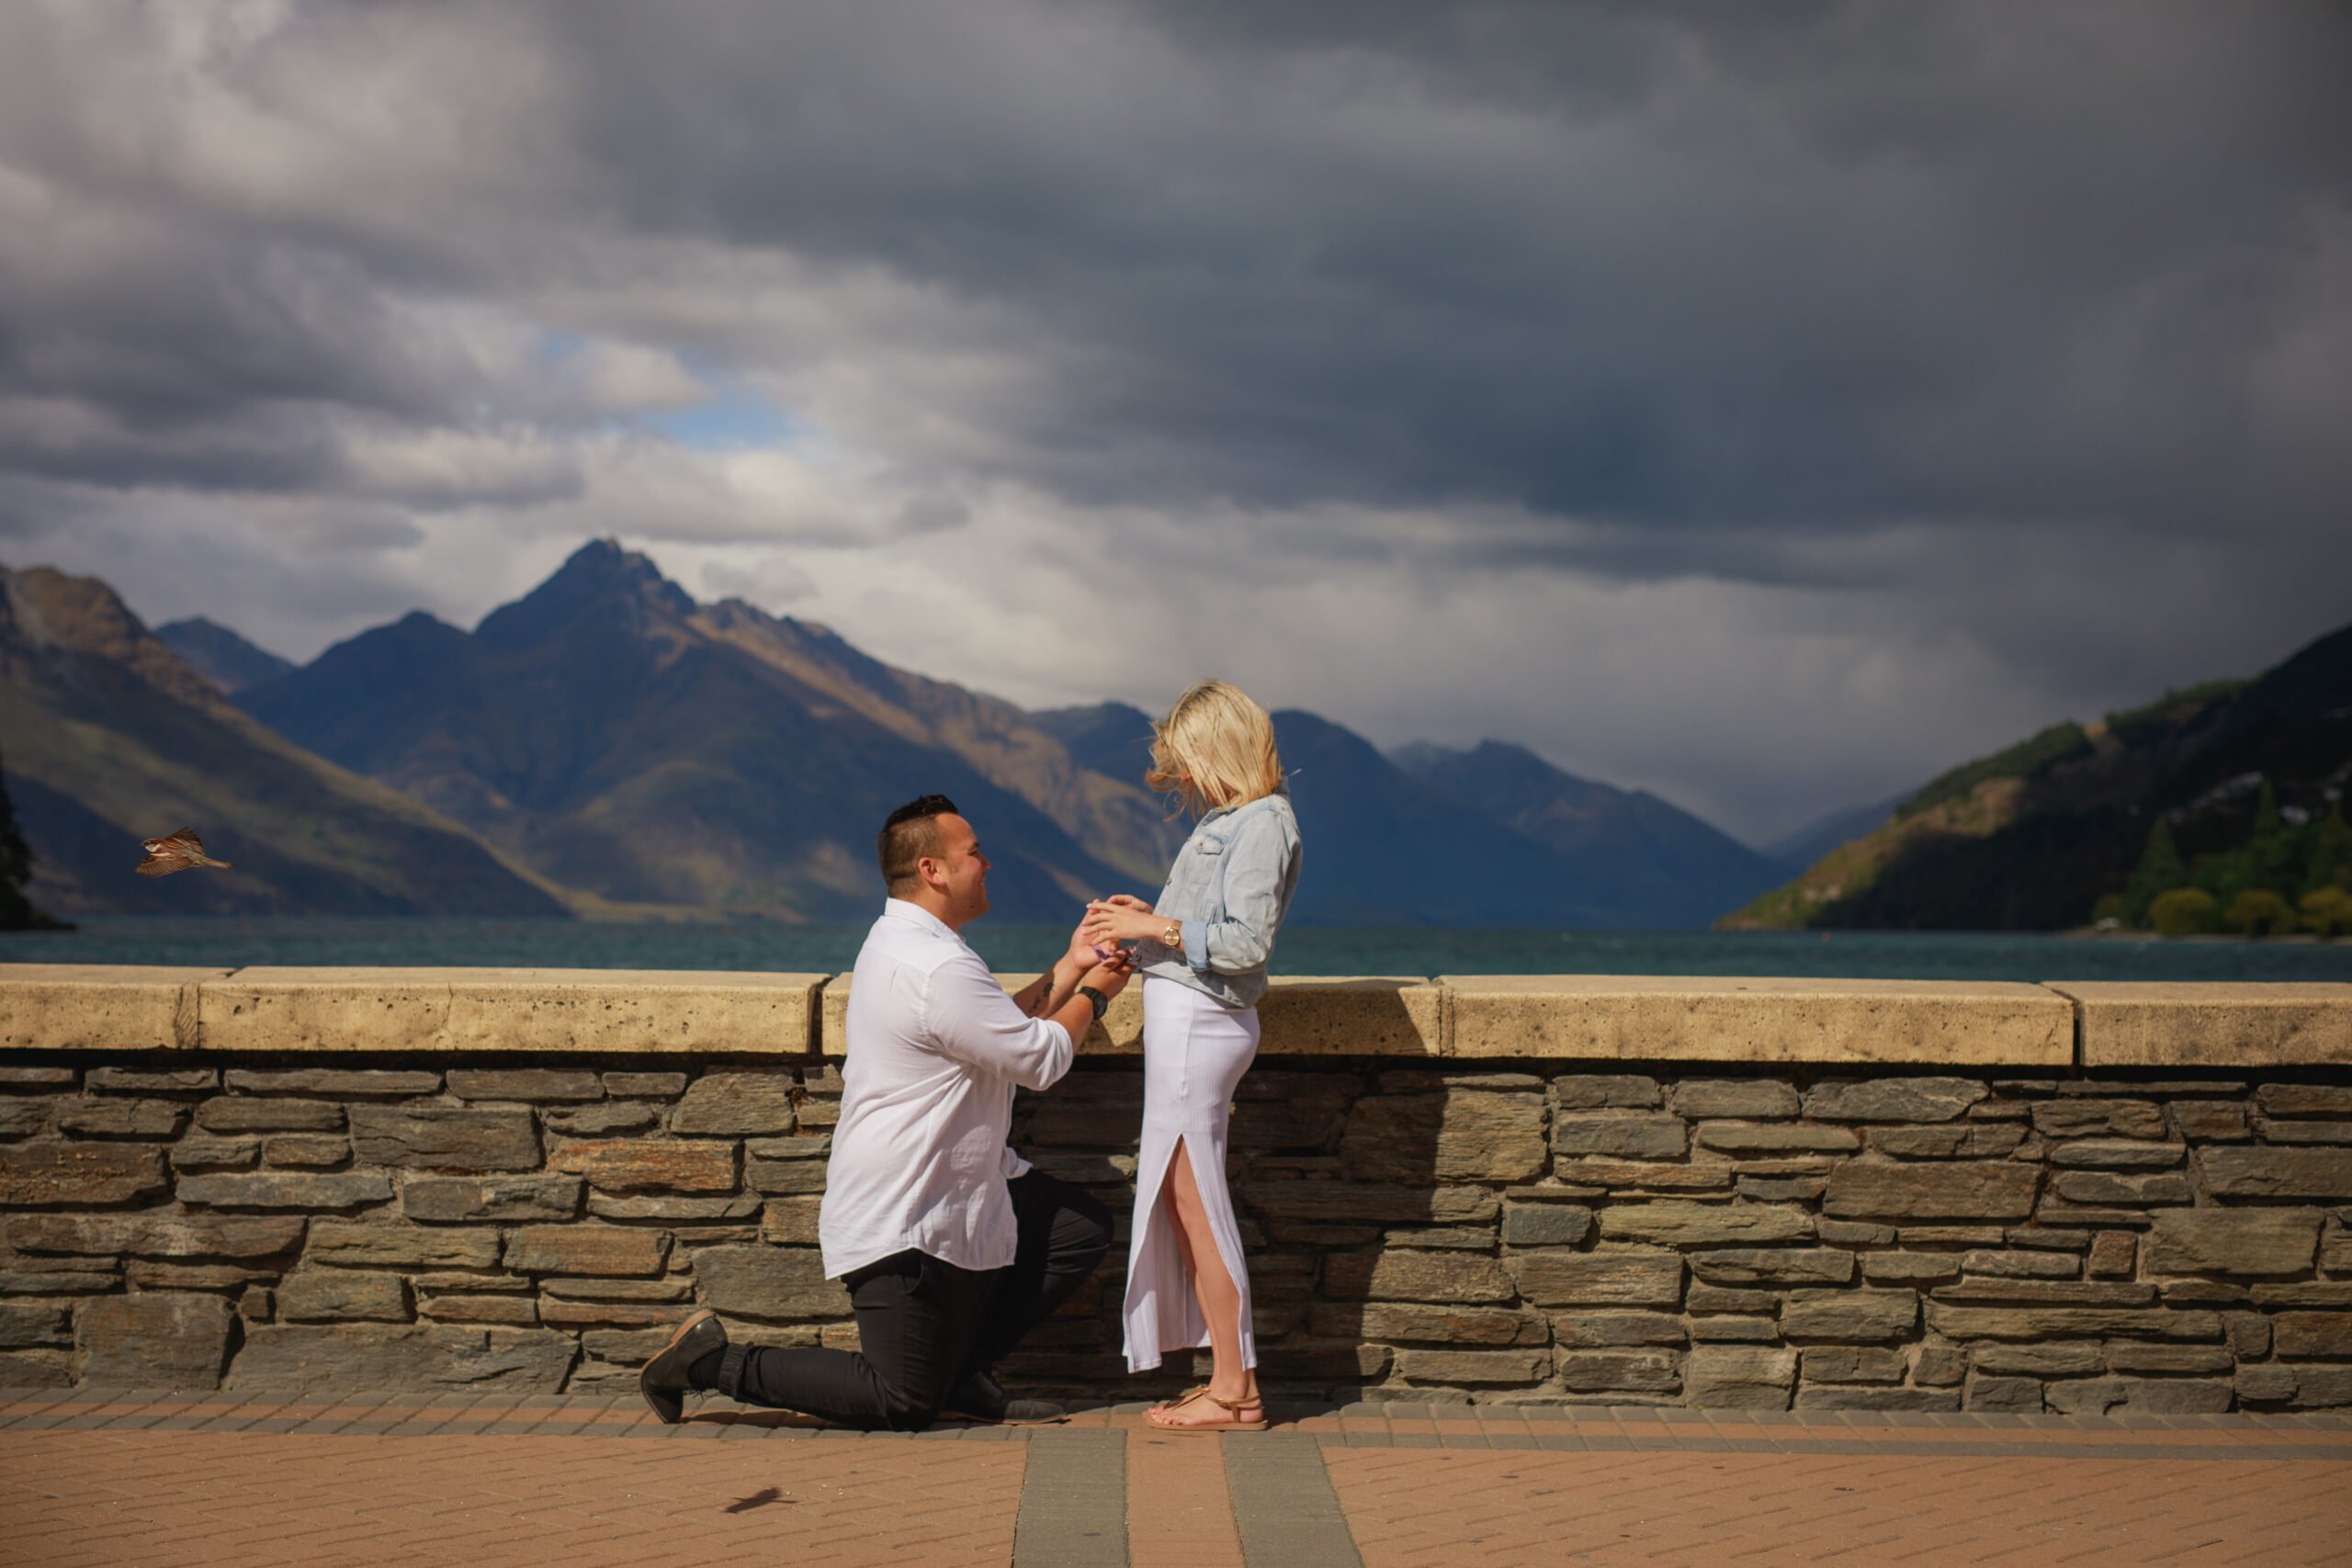 man on one knee proposing by lake